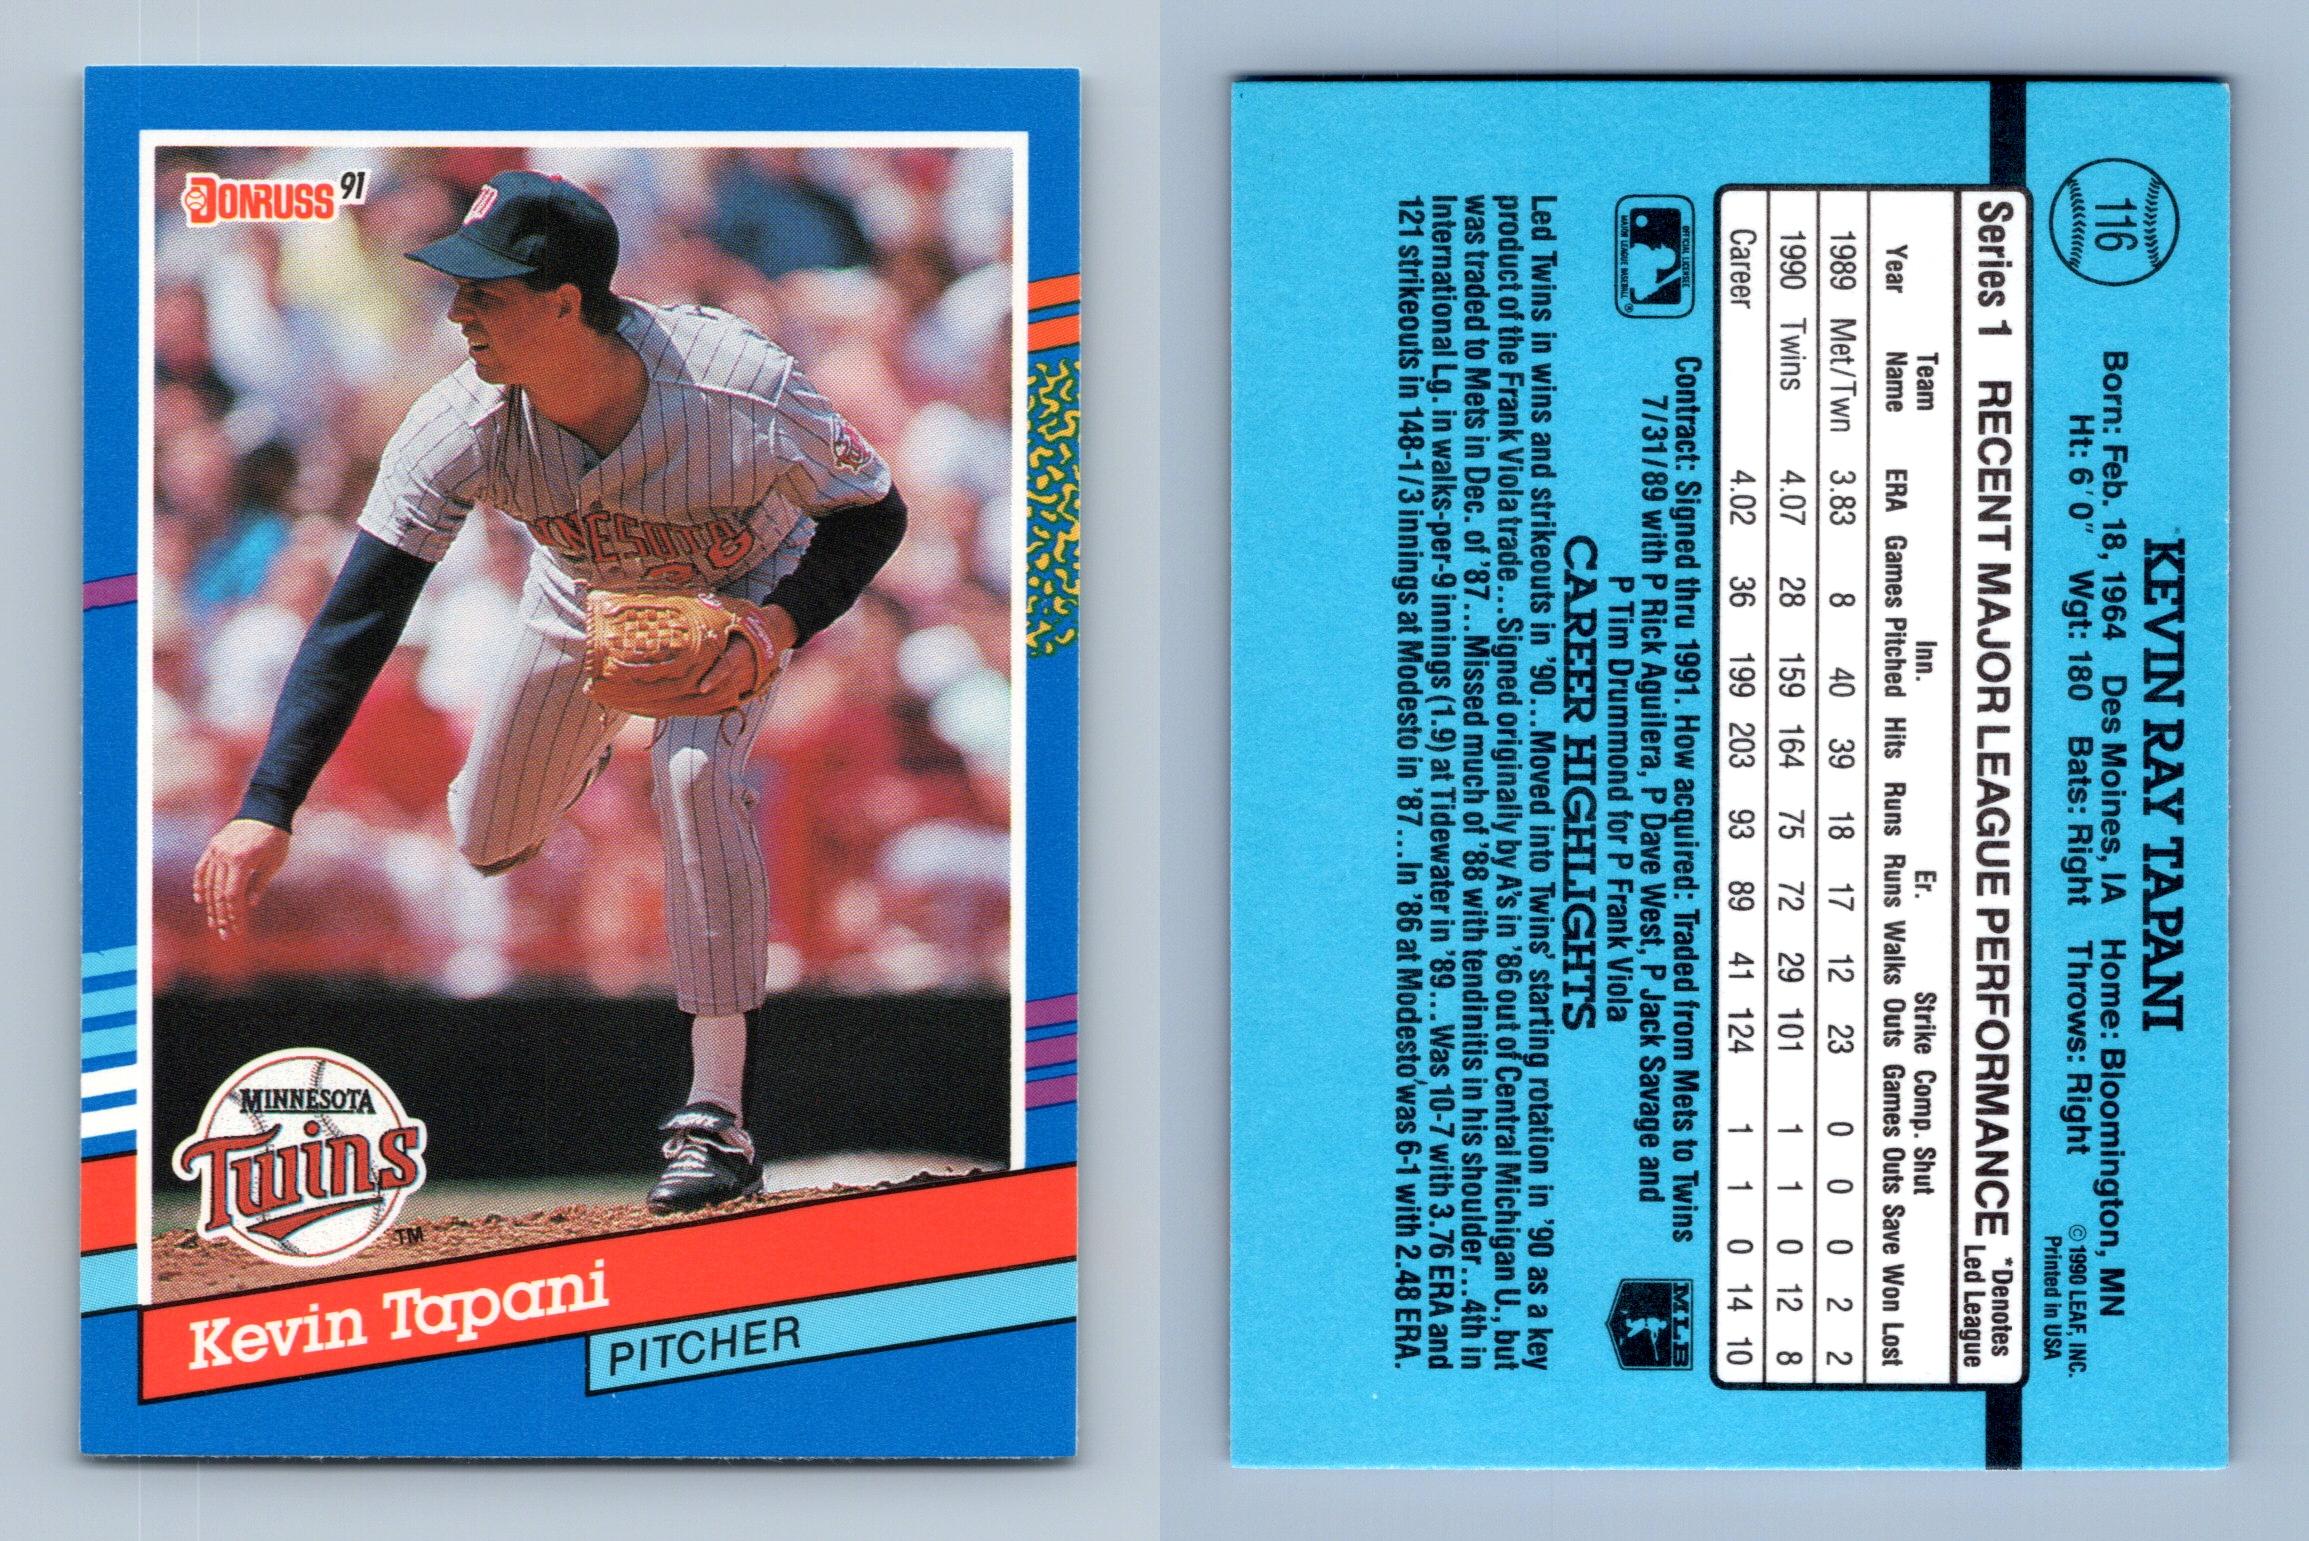 David Cone - Mets #154 Donruss 1991 Baseball Trading Card